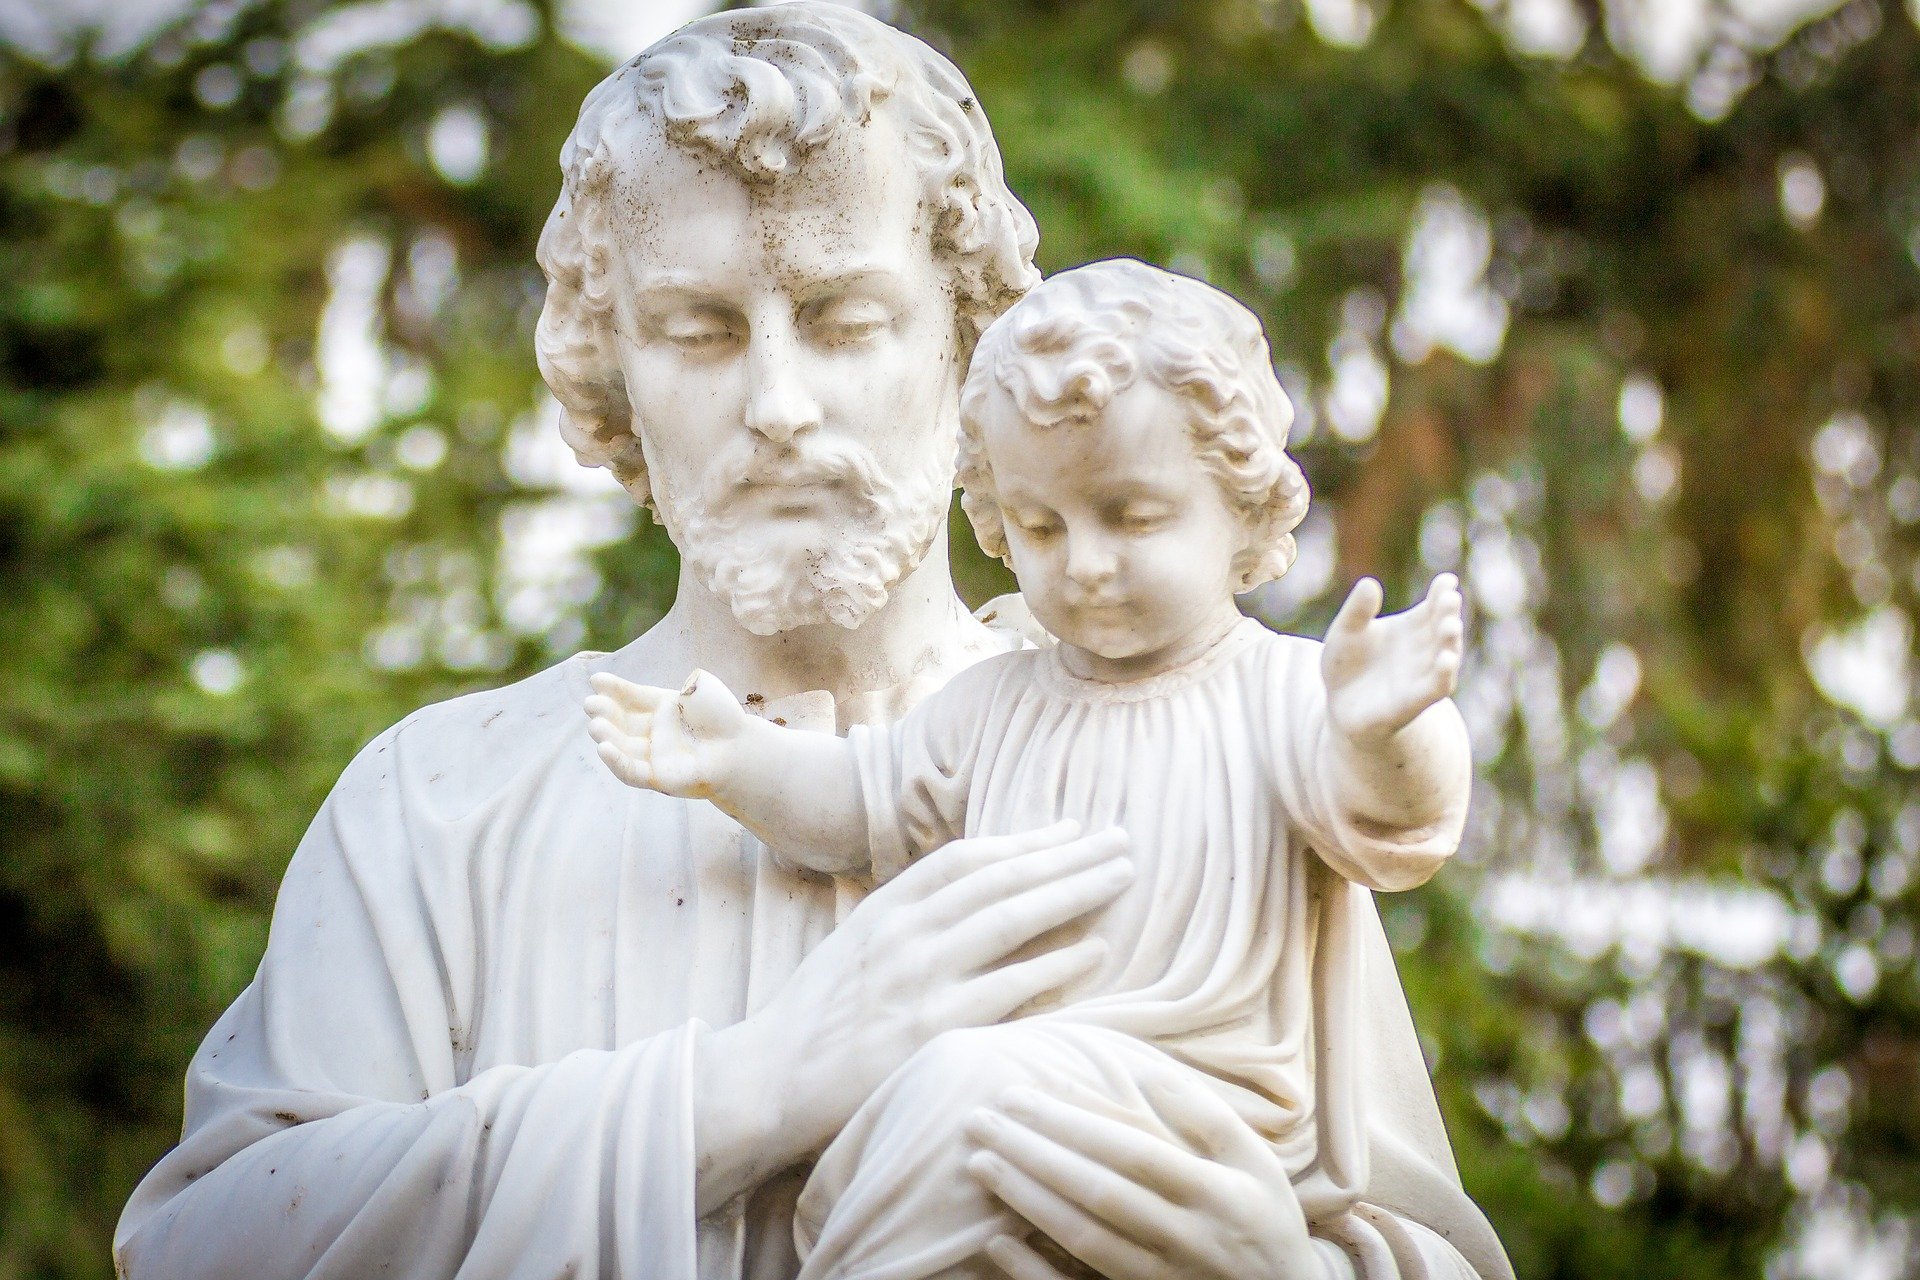 saint joseph statue, holding baby jesus